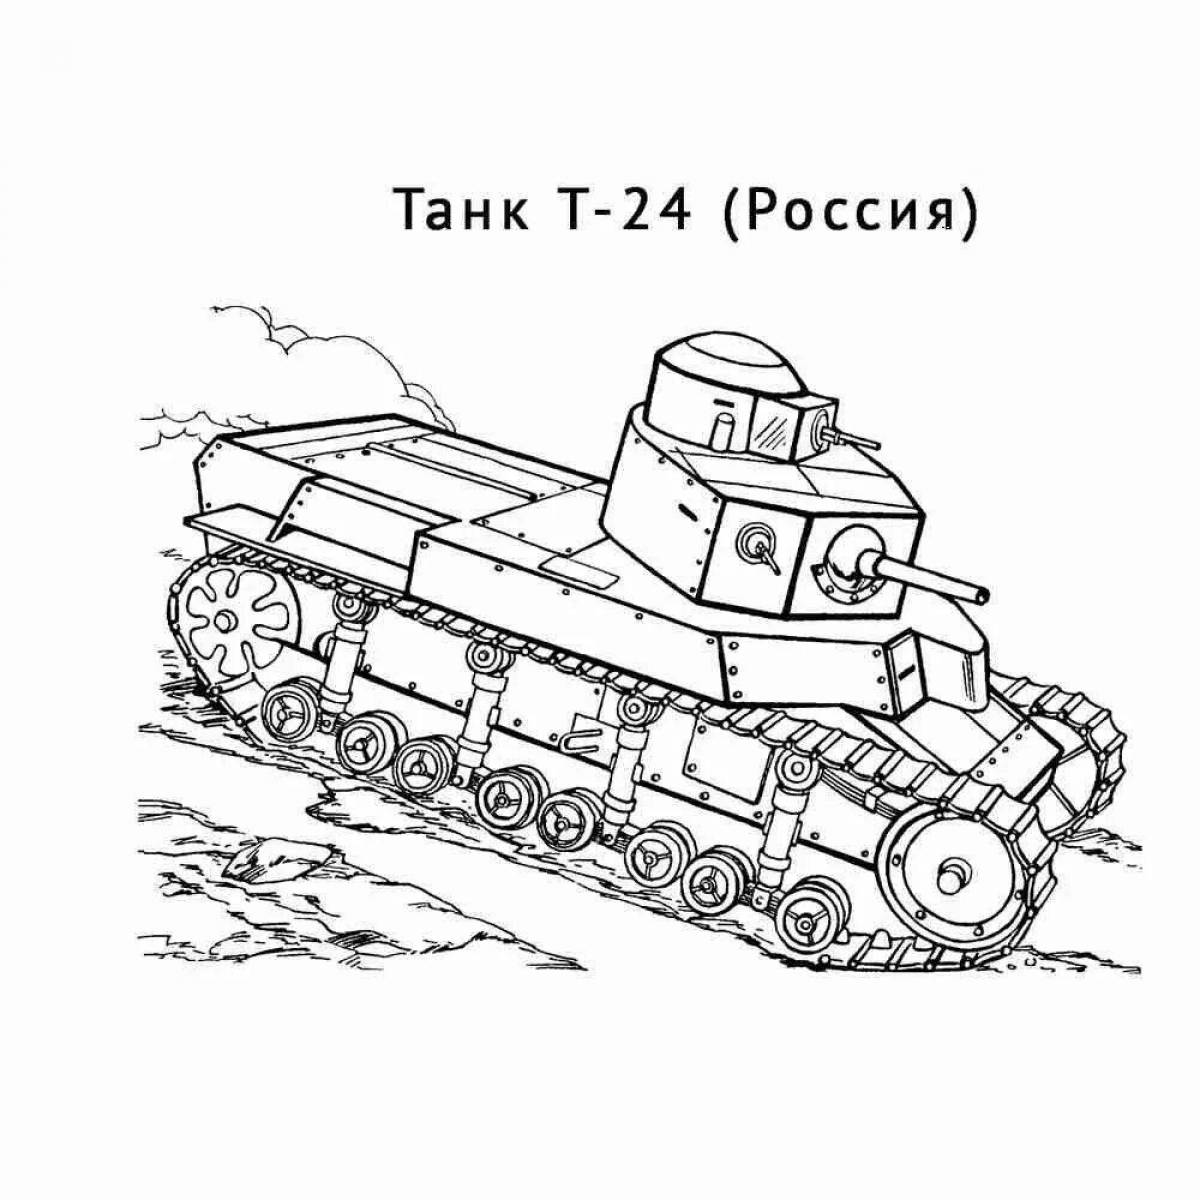 Tanks gerand leviathan #5